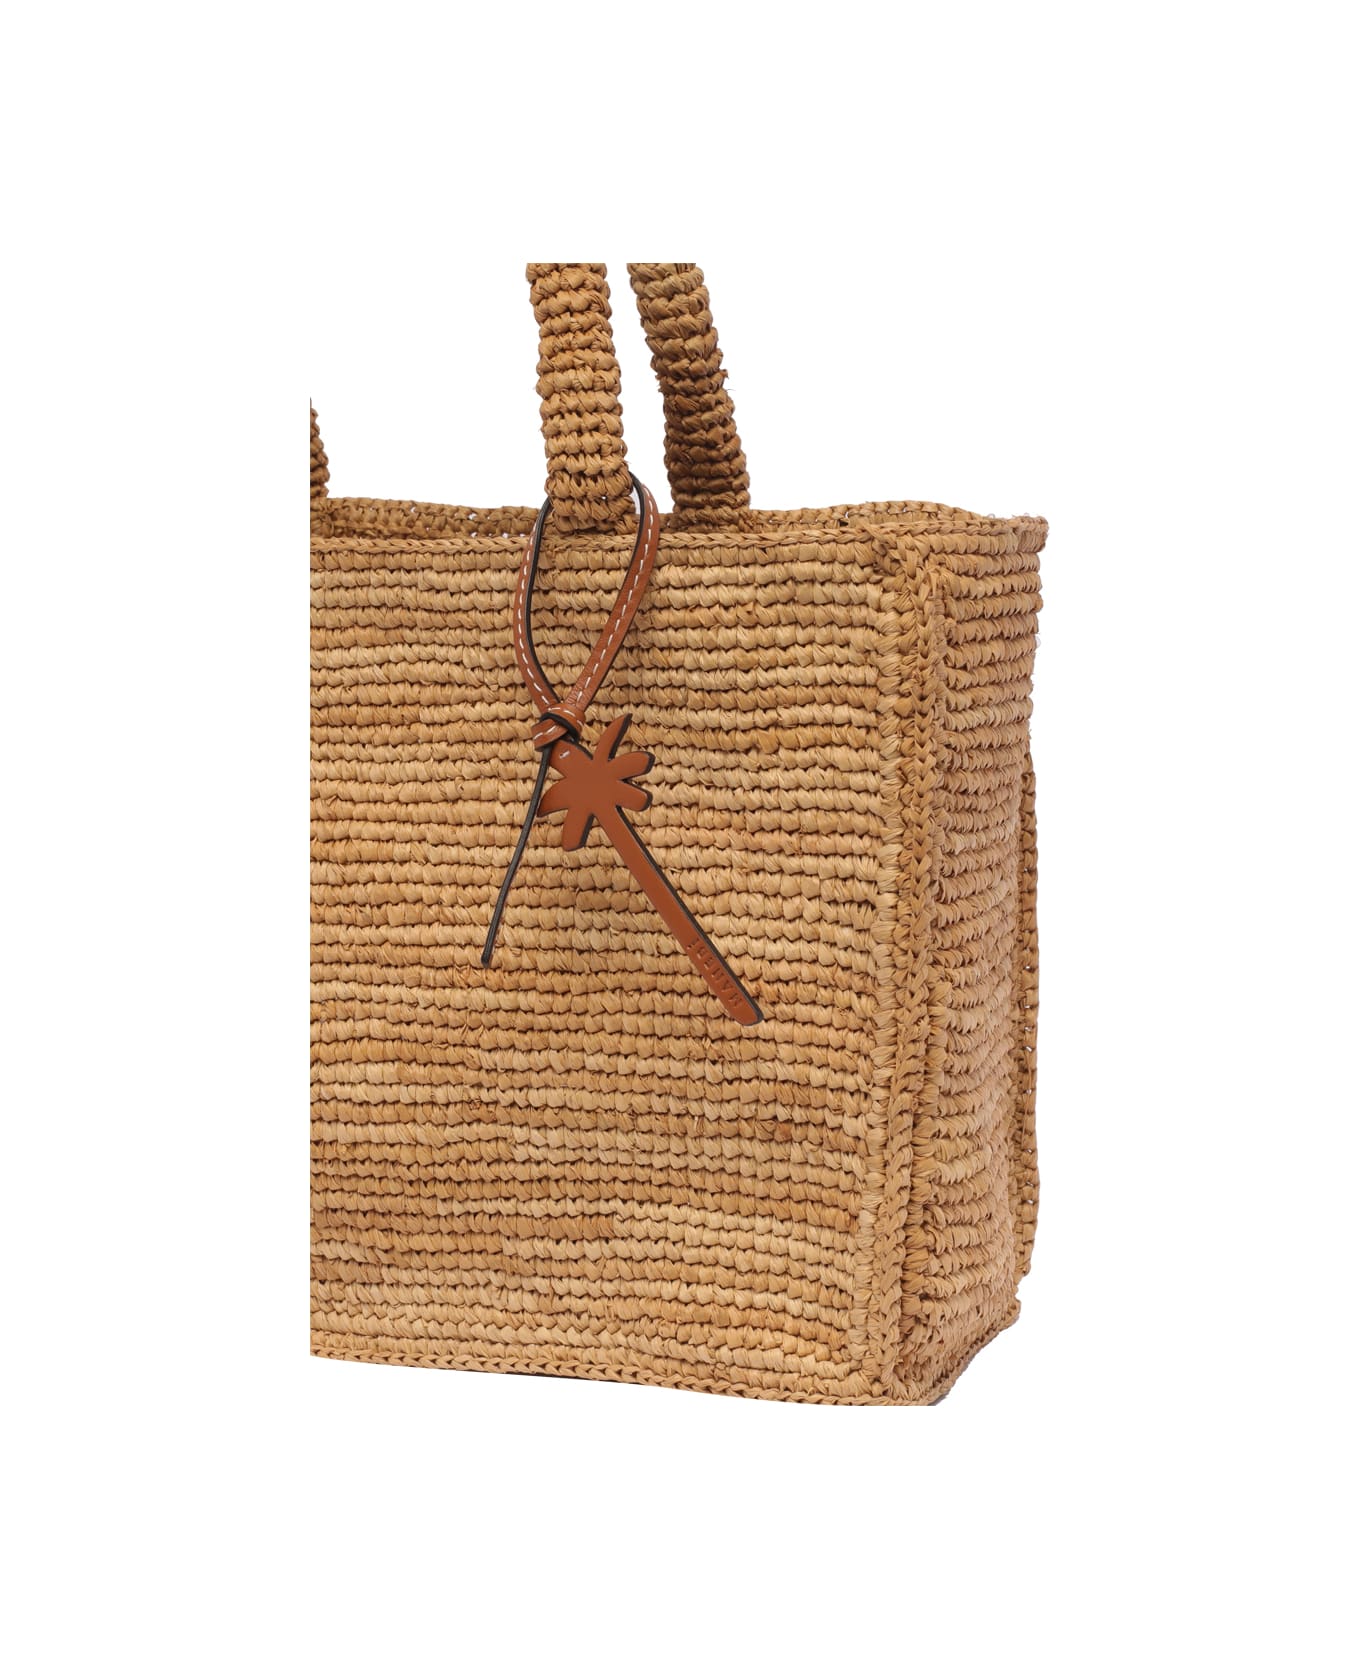 Manebi Small Sunset Handbag - Brown